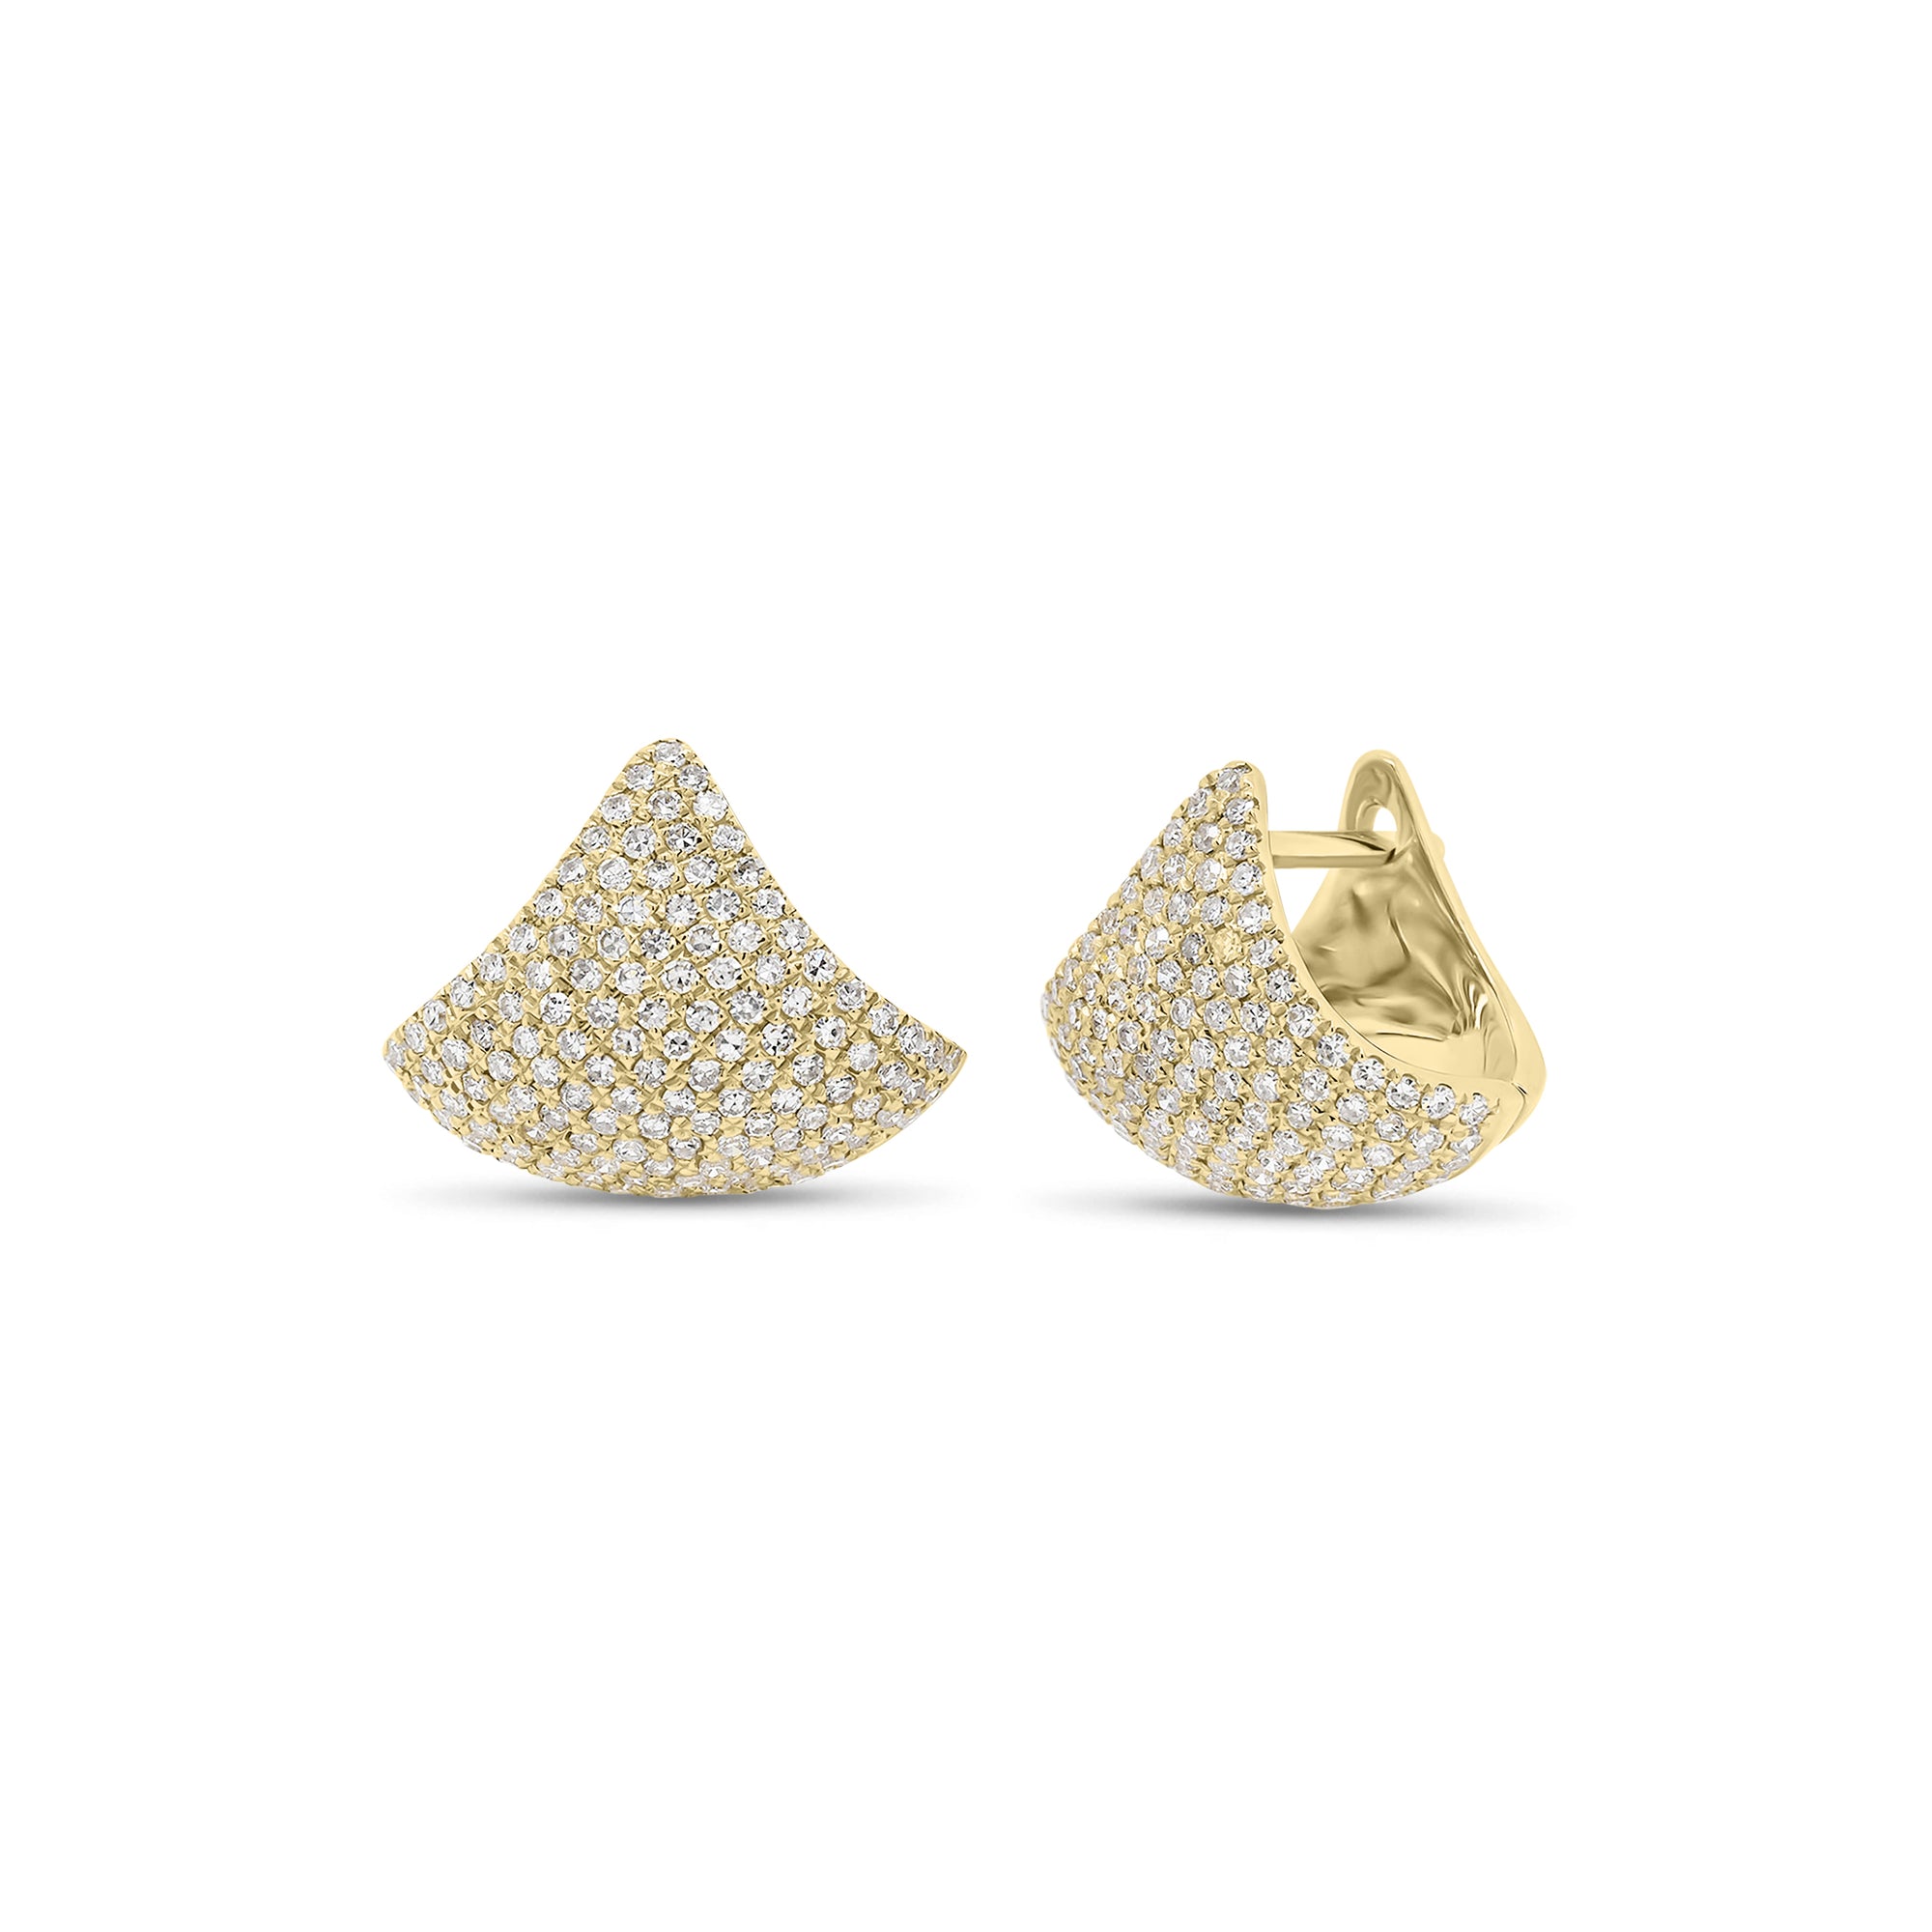 Pave Diamond Fan Huggie Earrings - 14K gold weighing 3.34 grams  - 286 round diamonds weighing 0.60 carats